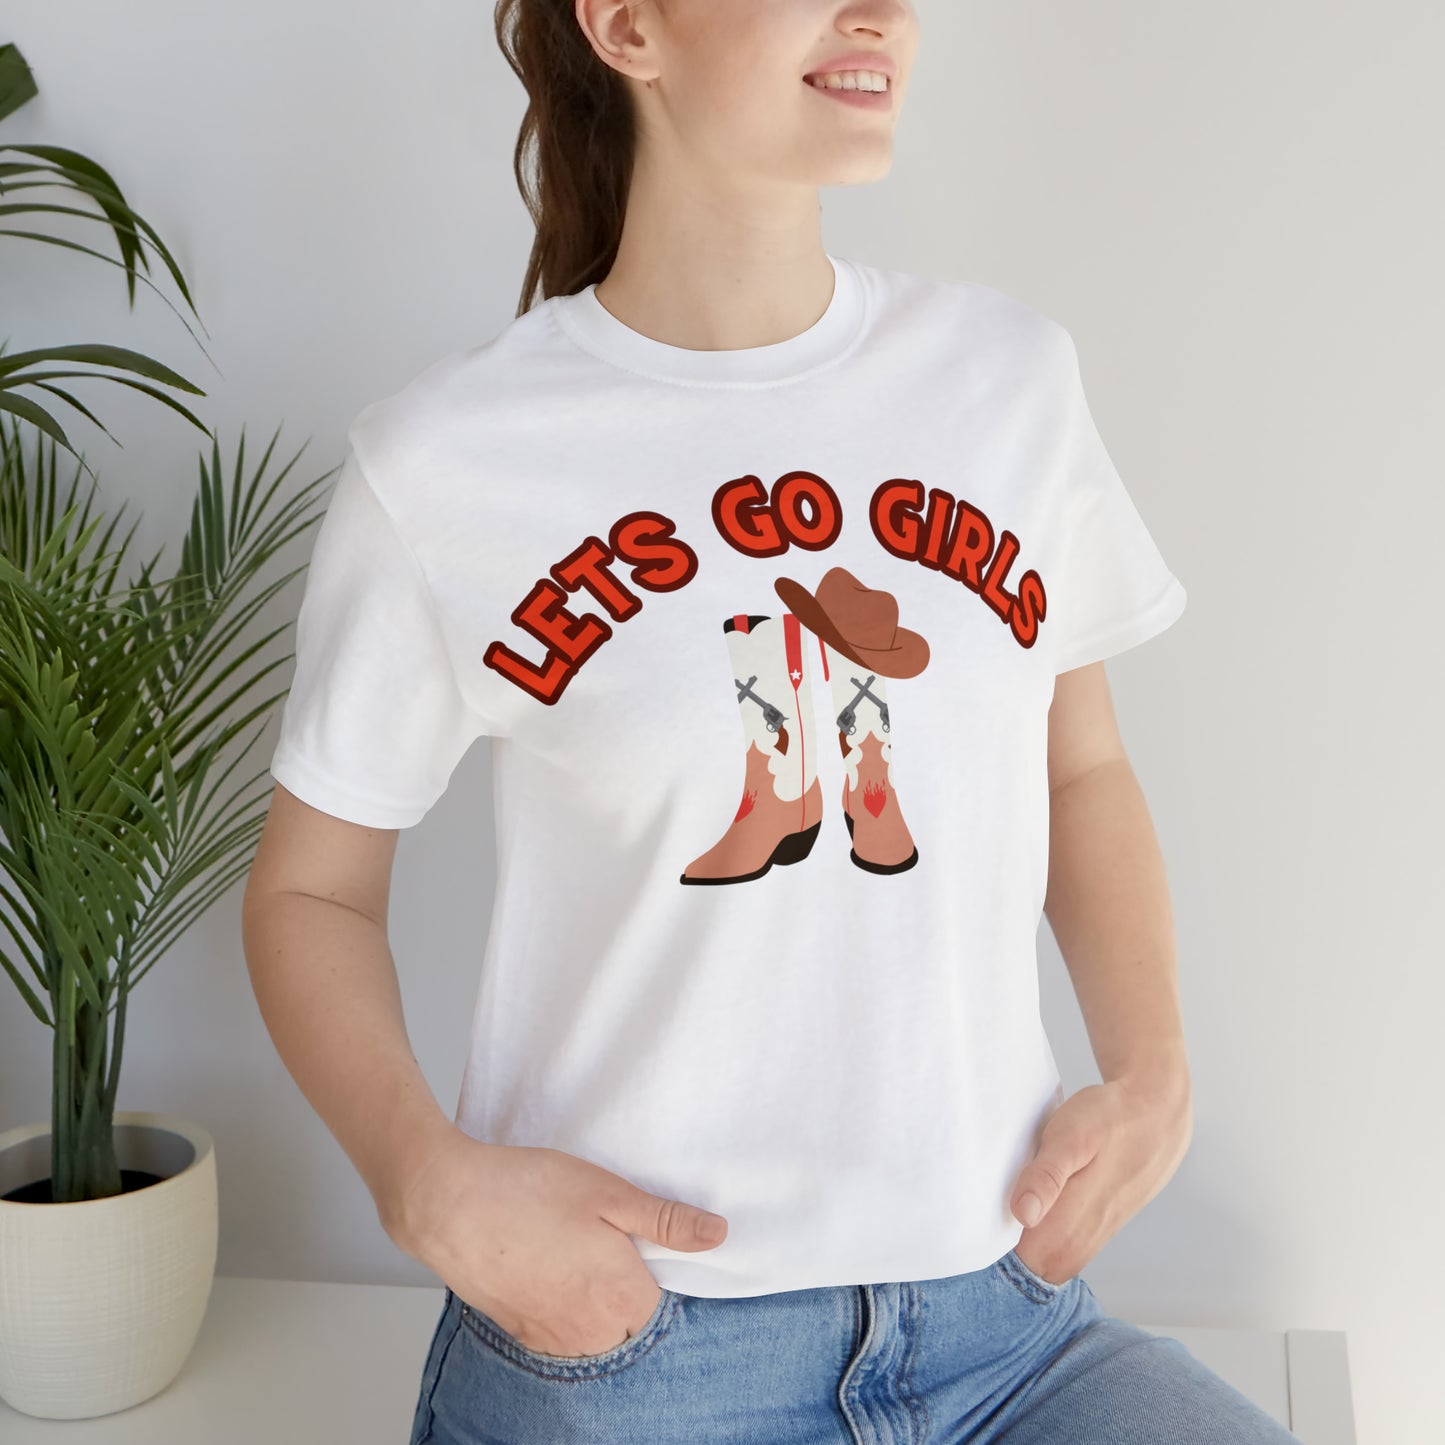 Let’s Go Girls | Unisex Jersey Short Sleeve Tee